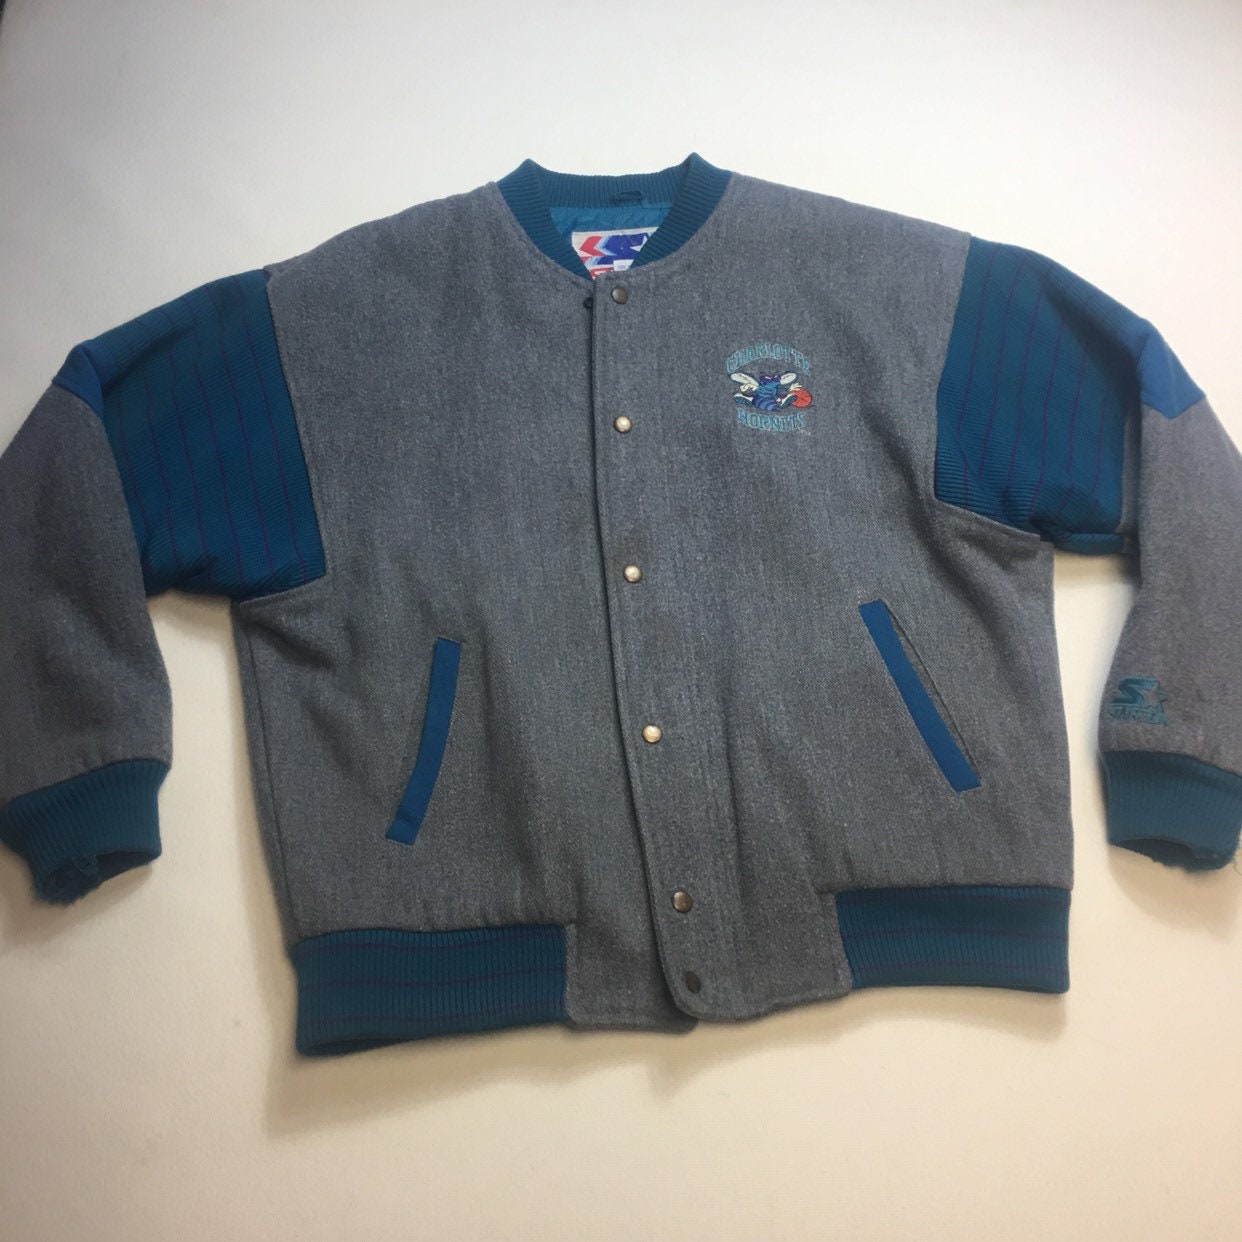 90s Charlotte Hornets jacket by Starter worn by J.Cole on the instagram  account @dadomdahdahdahdah